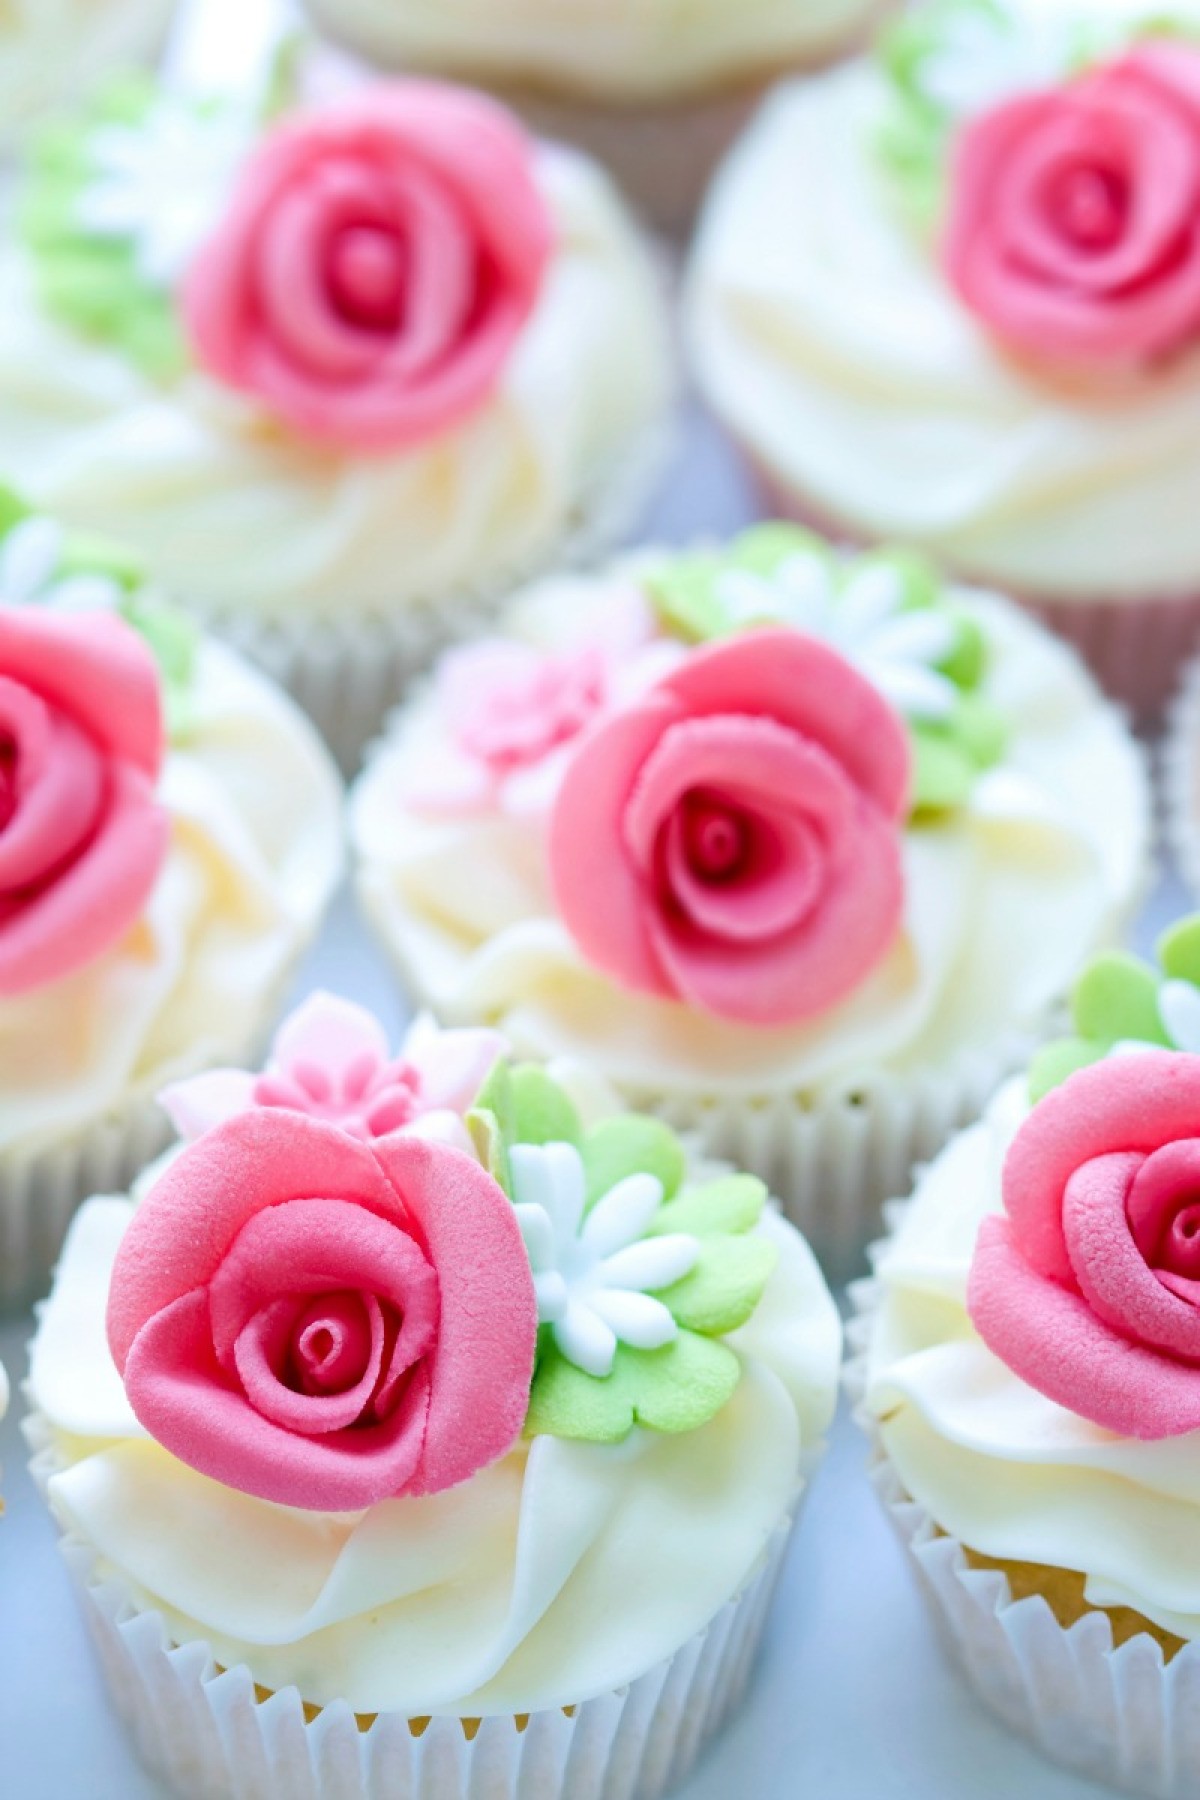 Displaying Wedding Cupcakes | My Frugal Wedding